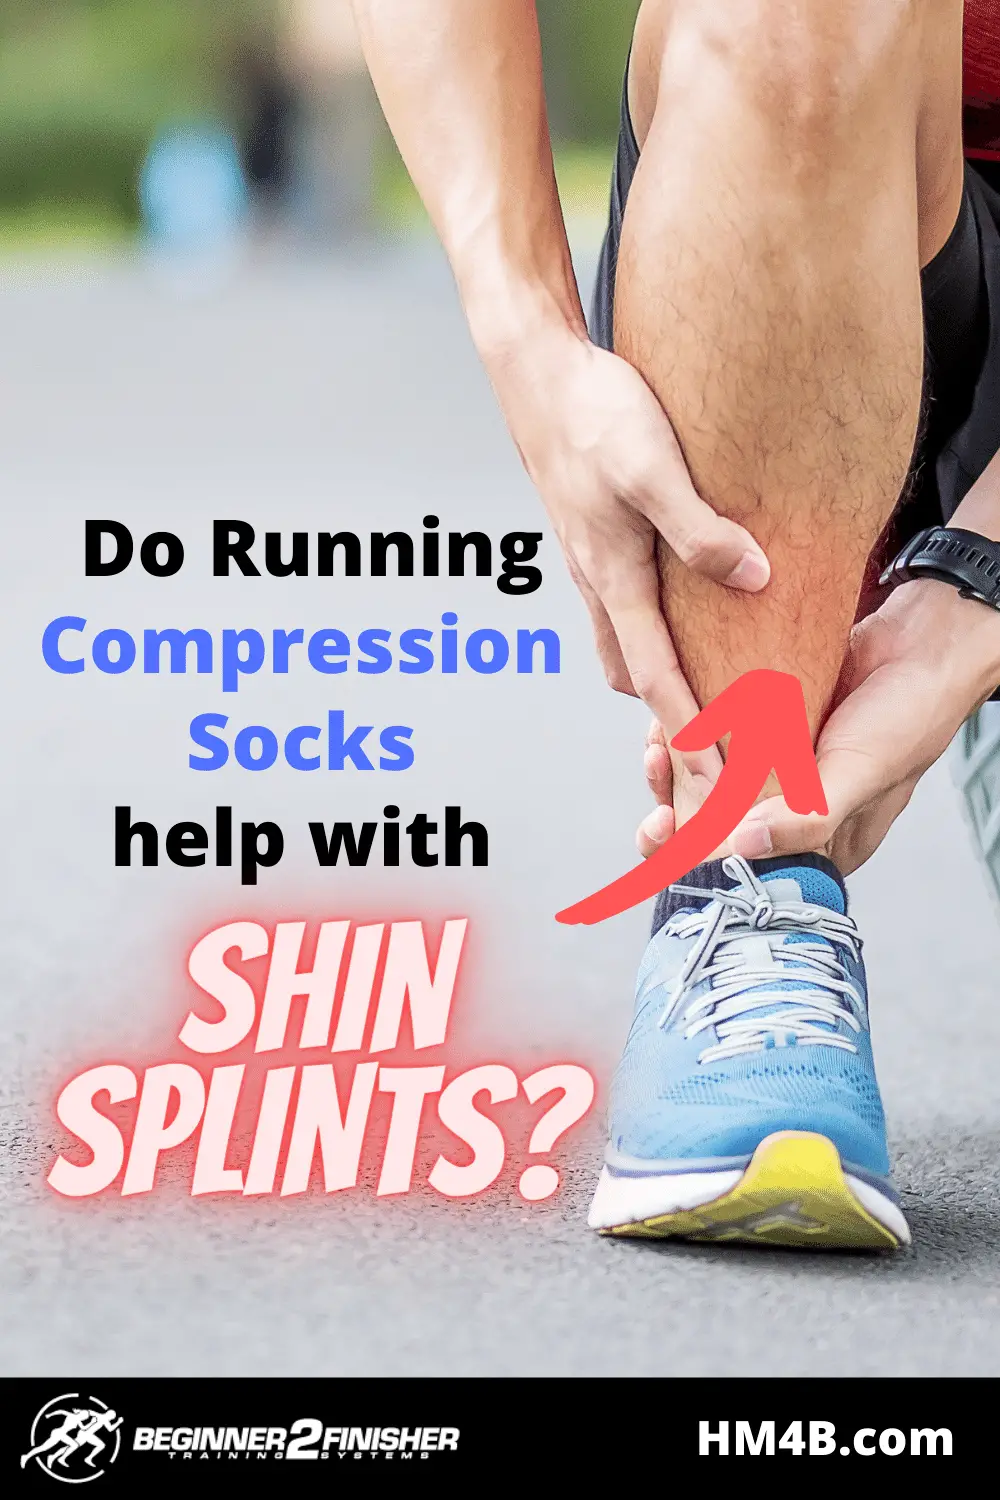 Do running compression socks help with shin splints?